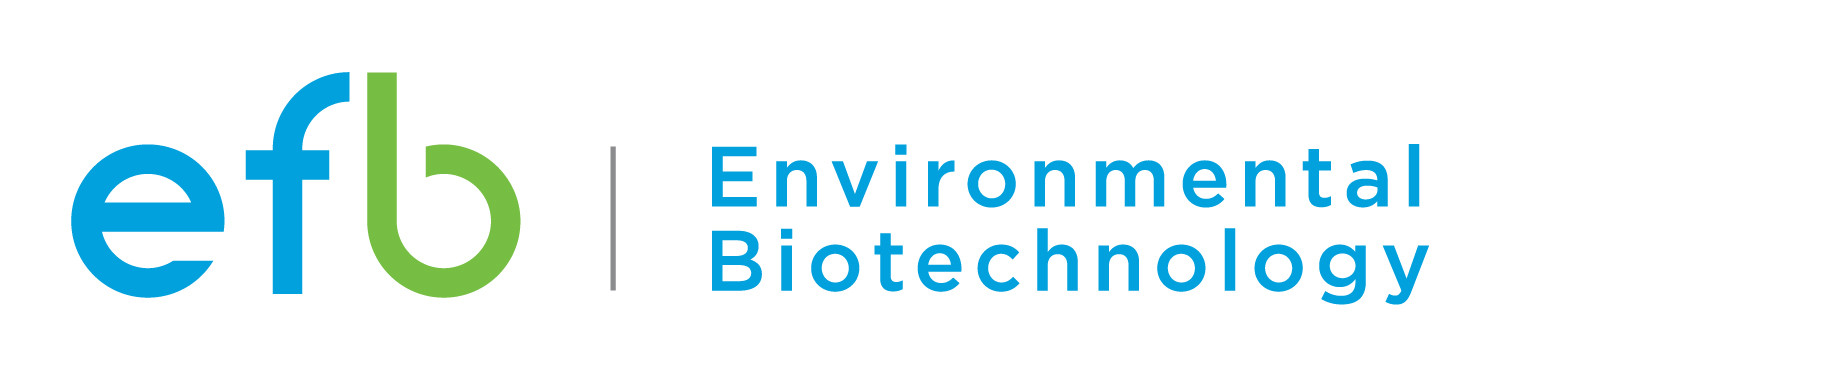 EFB Environmental Biotechnology Division